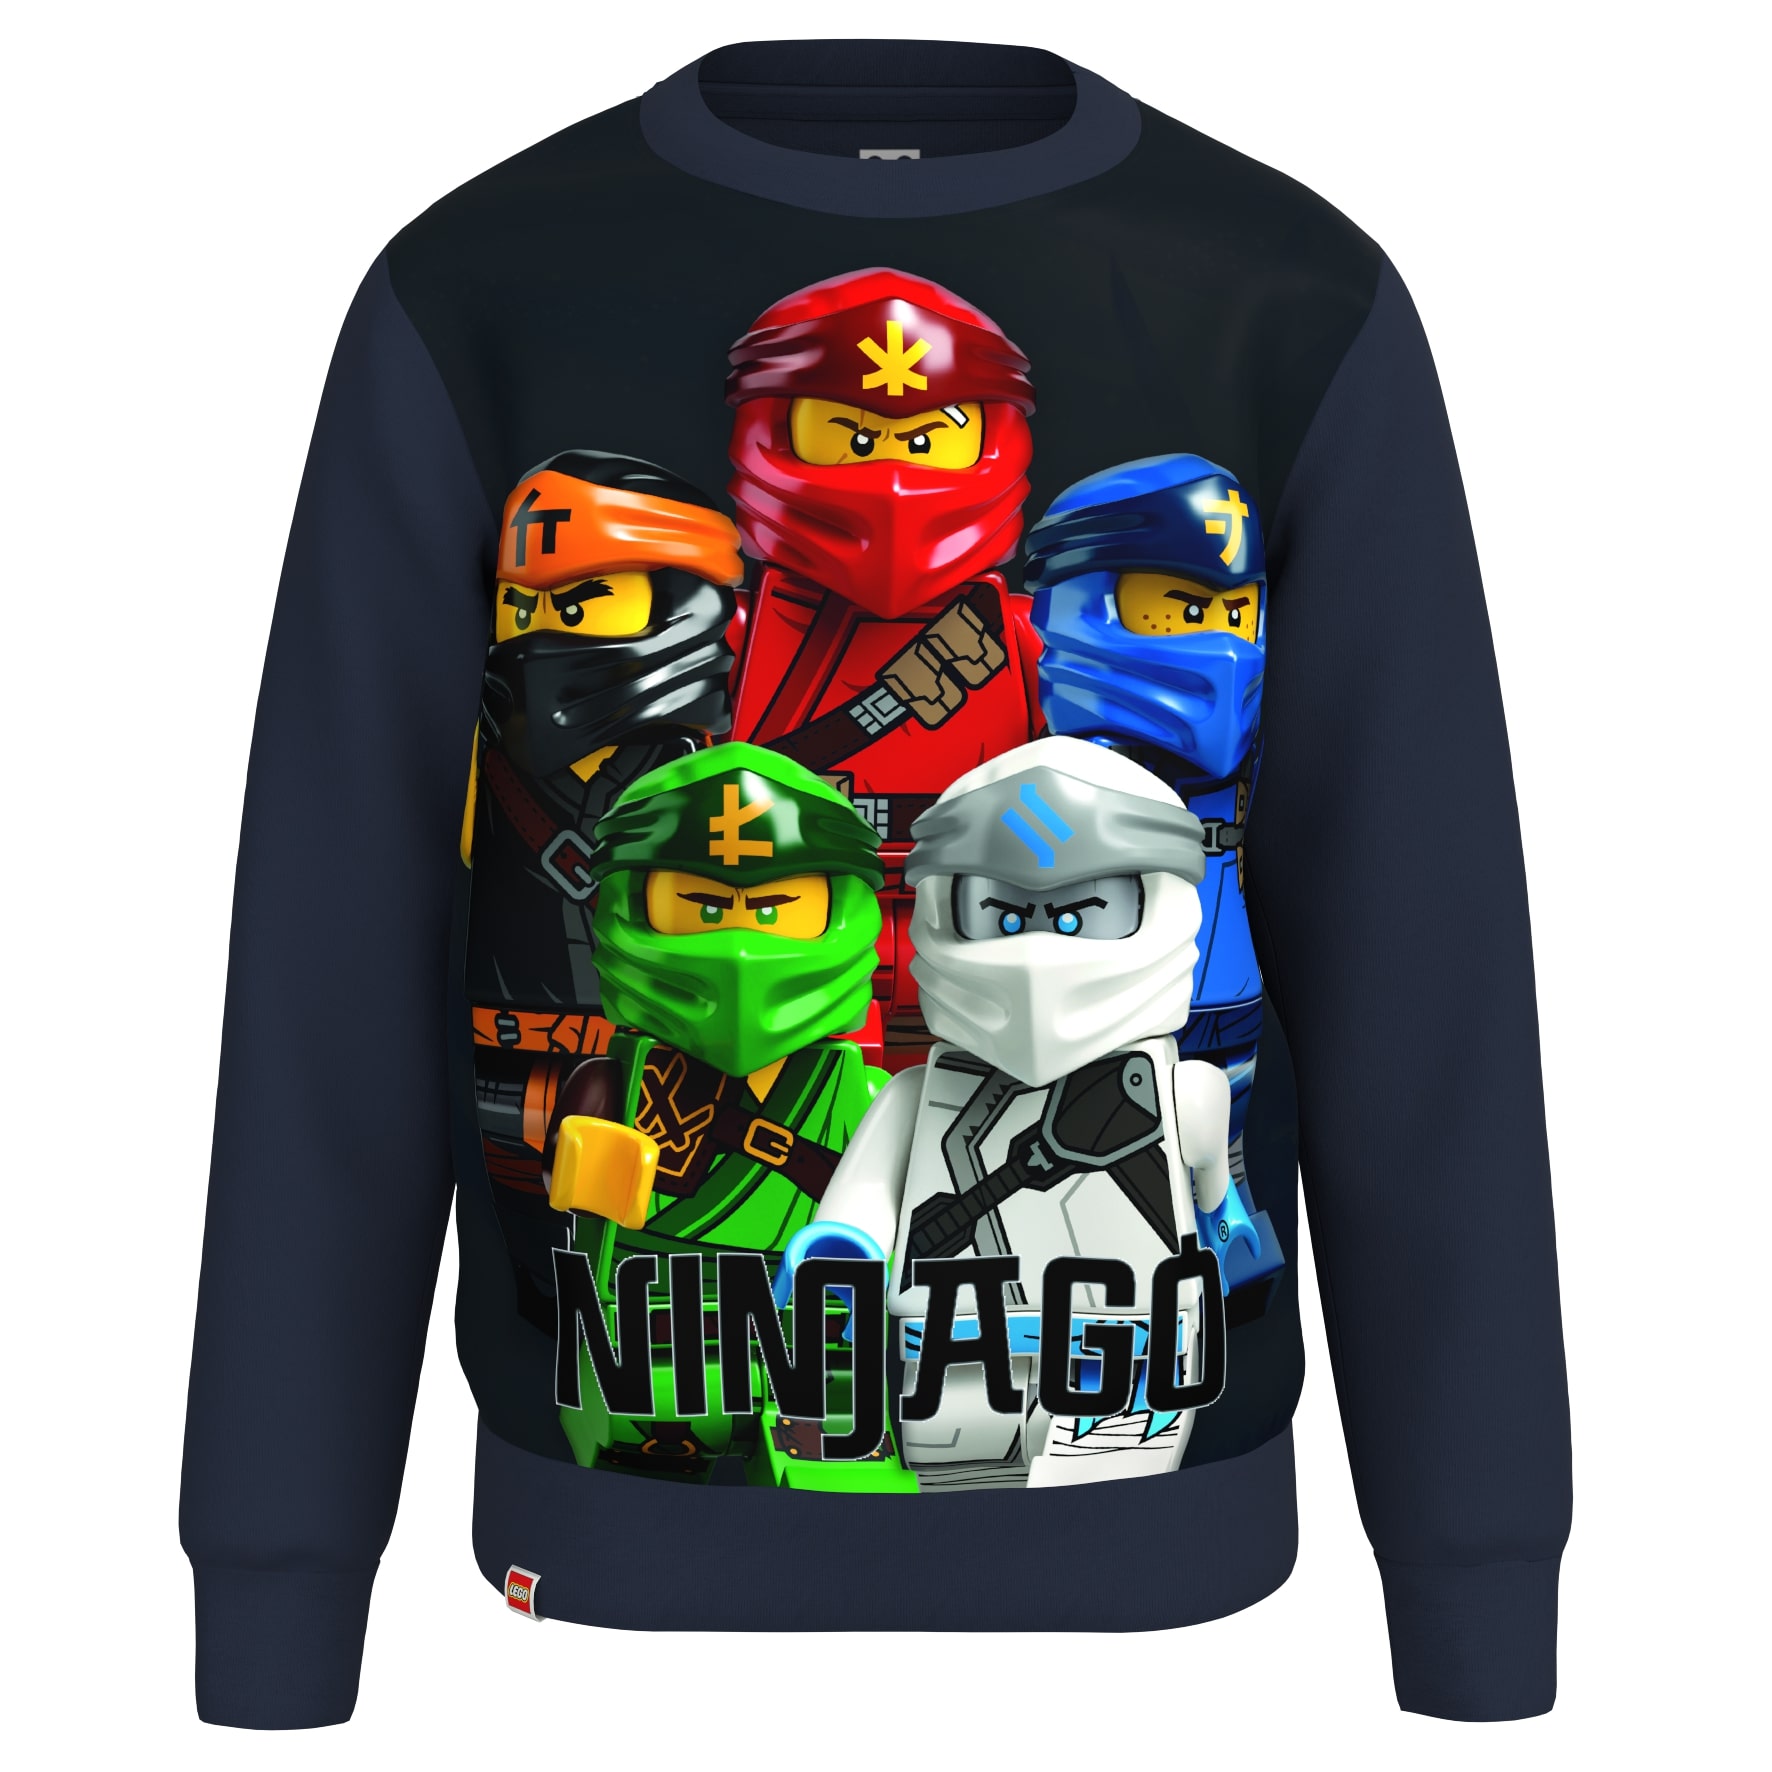 Ninjago Sweater